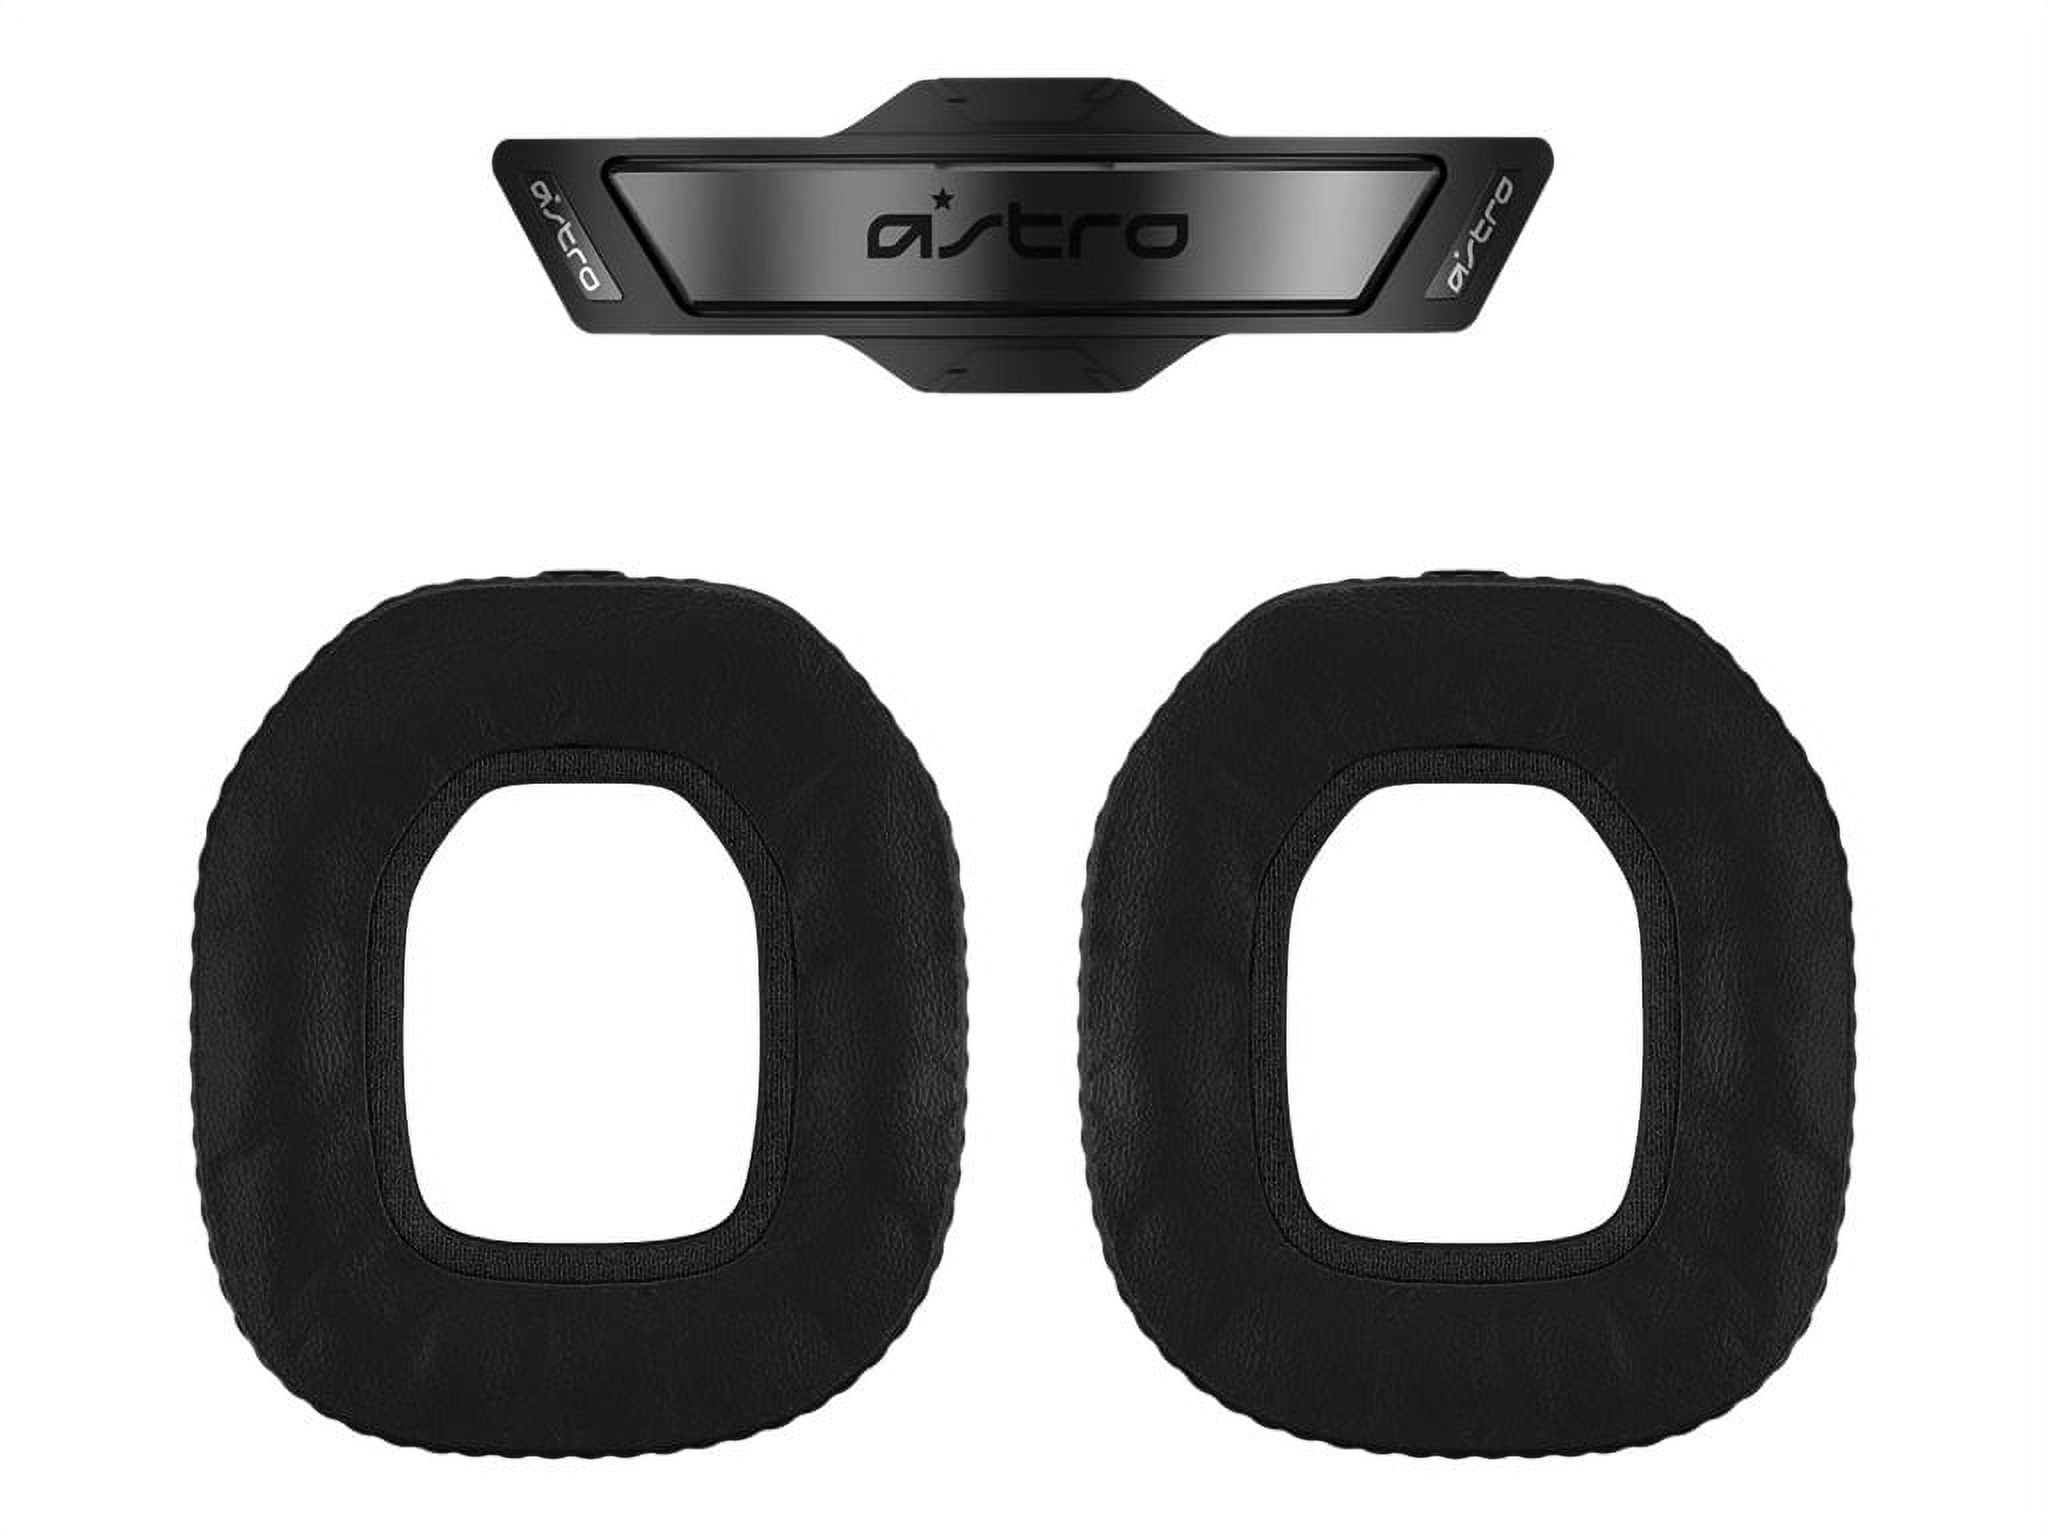 ASTRO - Mod kit for headset - black - Walmart.com